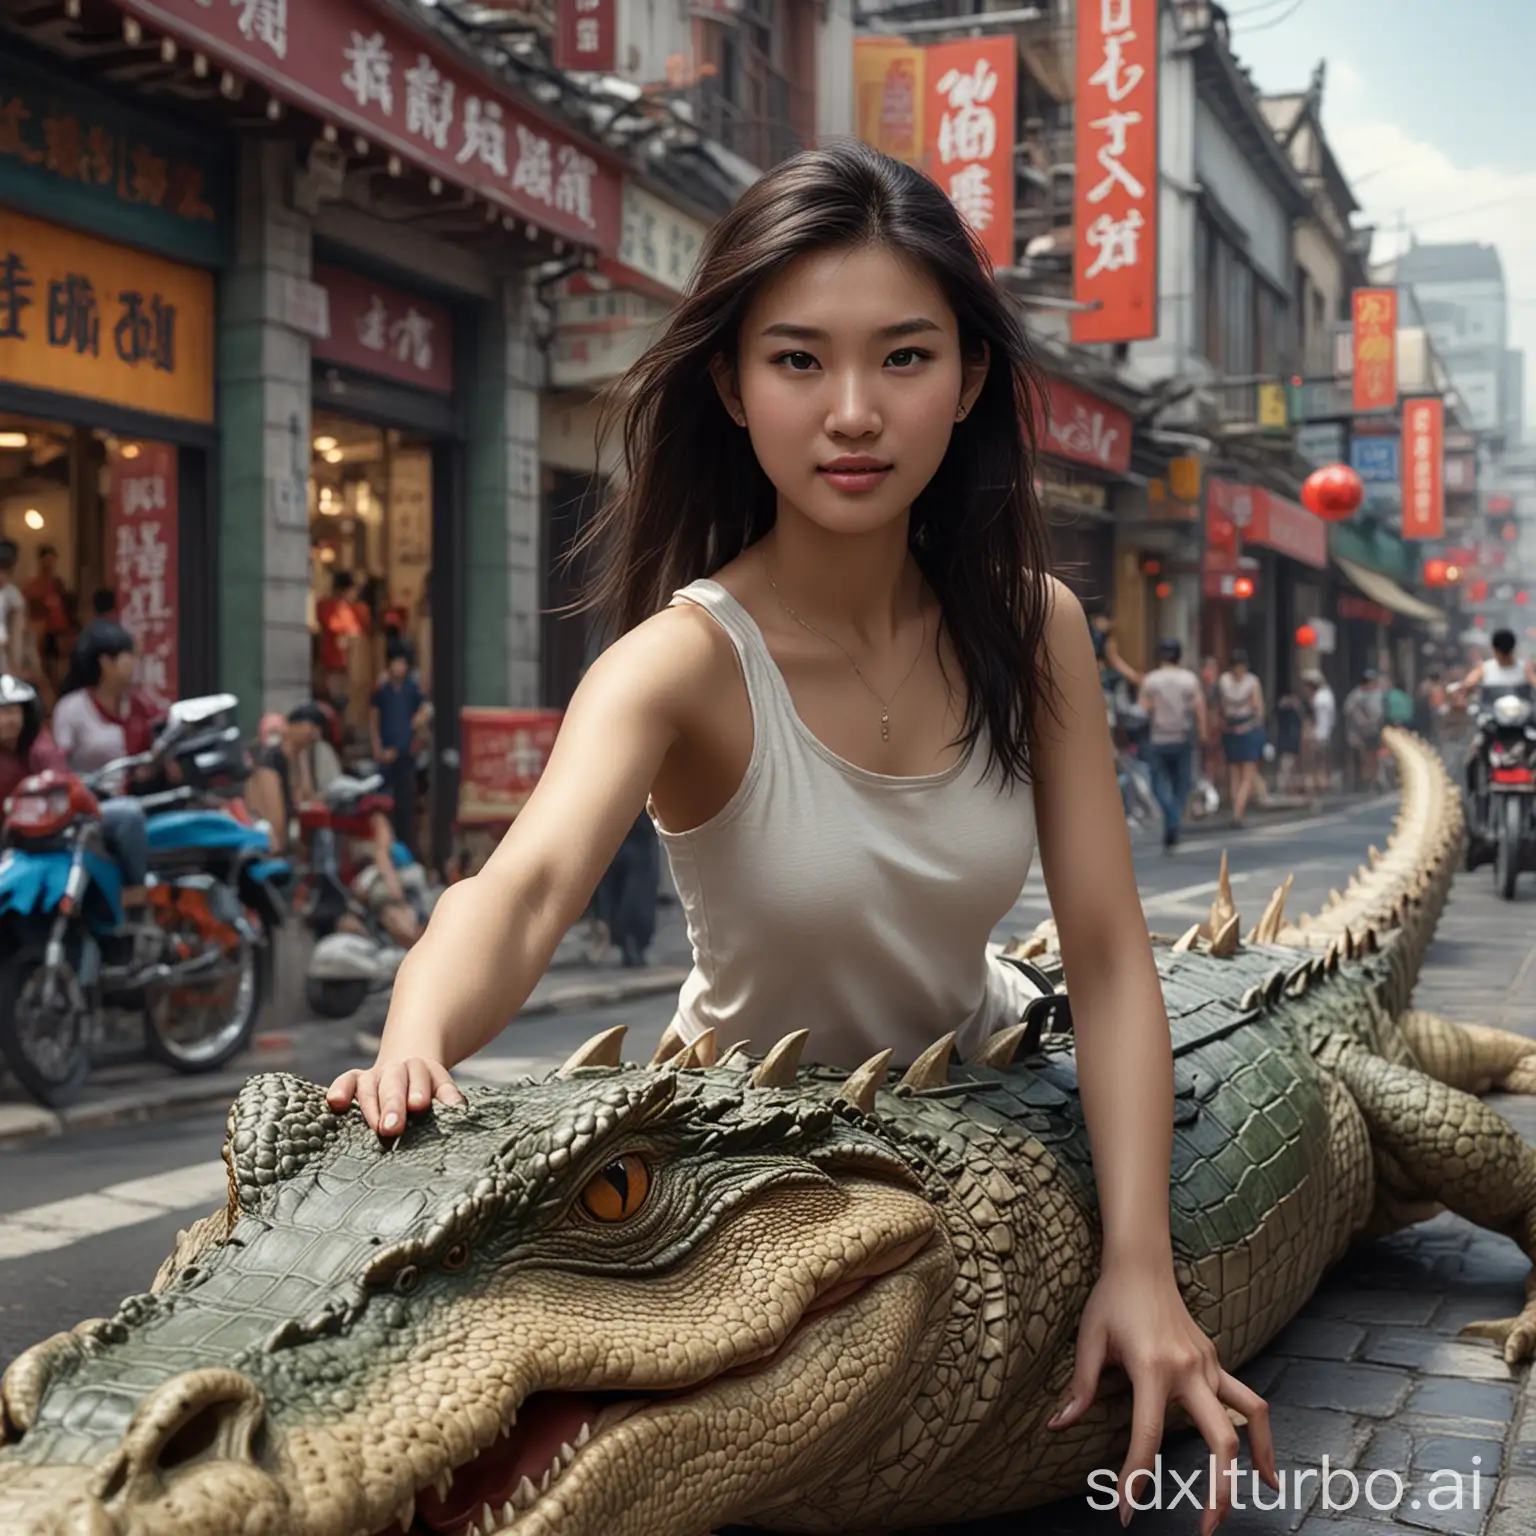 Vibrant-Urban-Scene-Chinese-Girl-Riding-Crocodile-in-Busy-City-Street